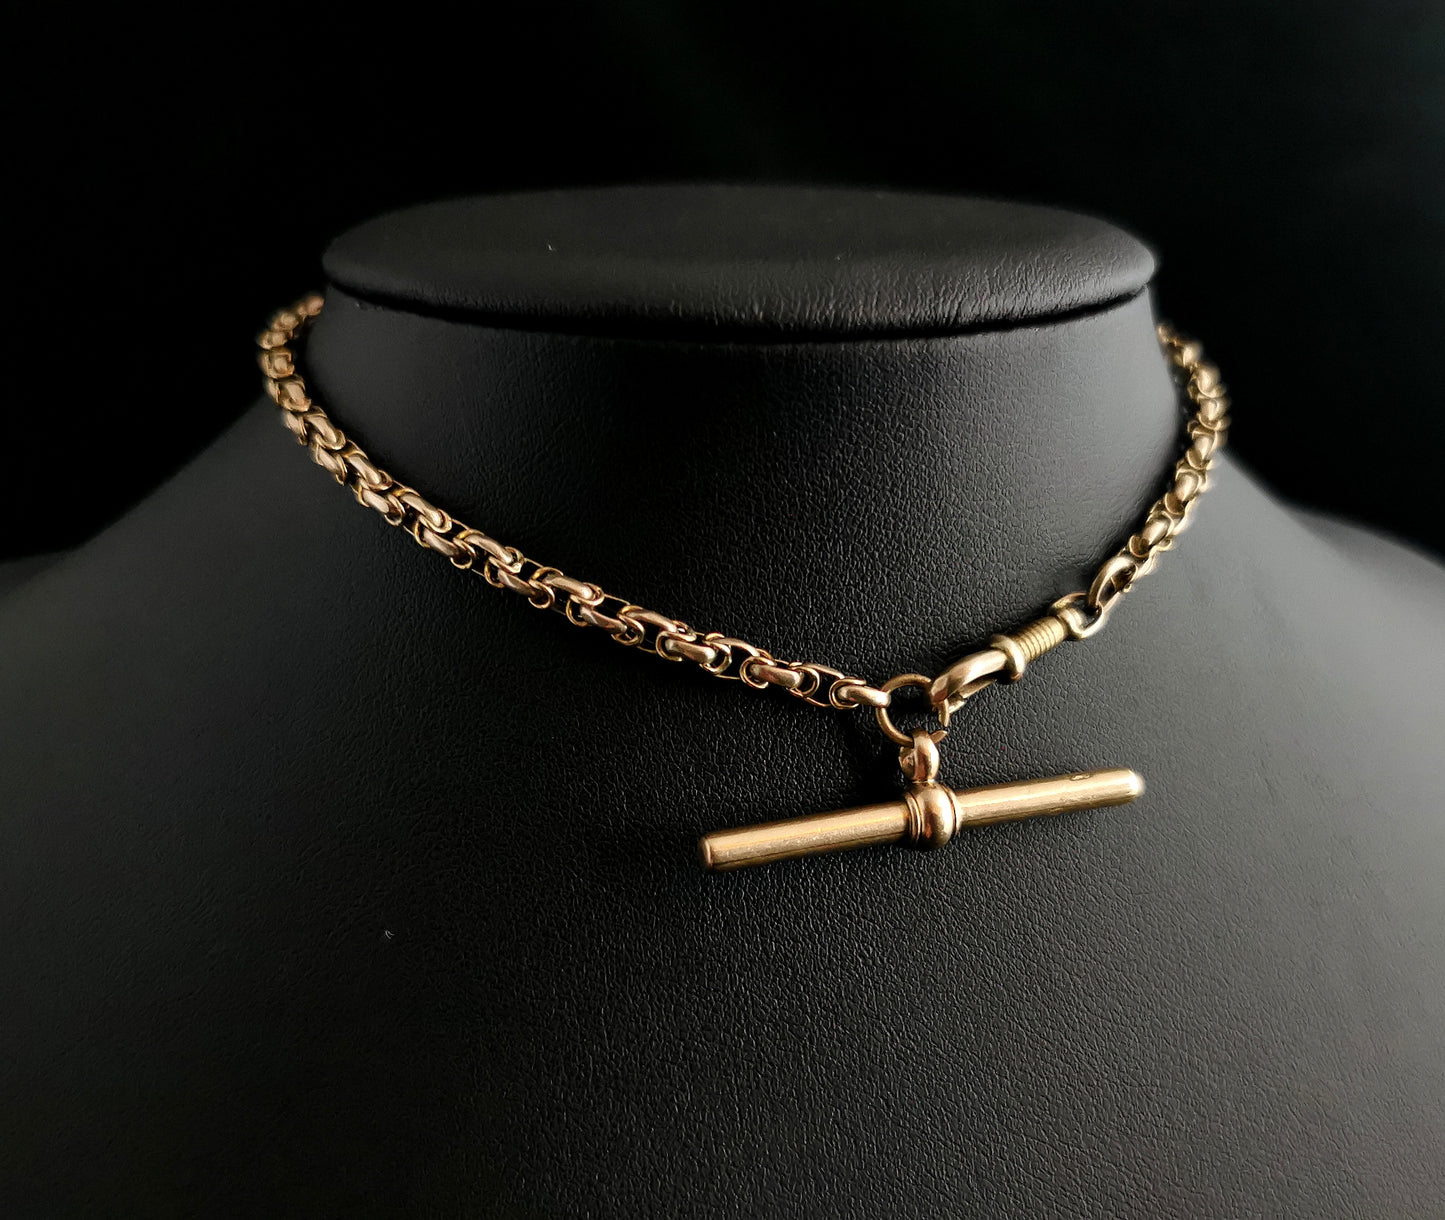 Antique 9ct gold fancy link watch chain, Albert chain